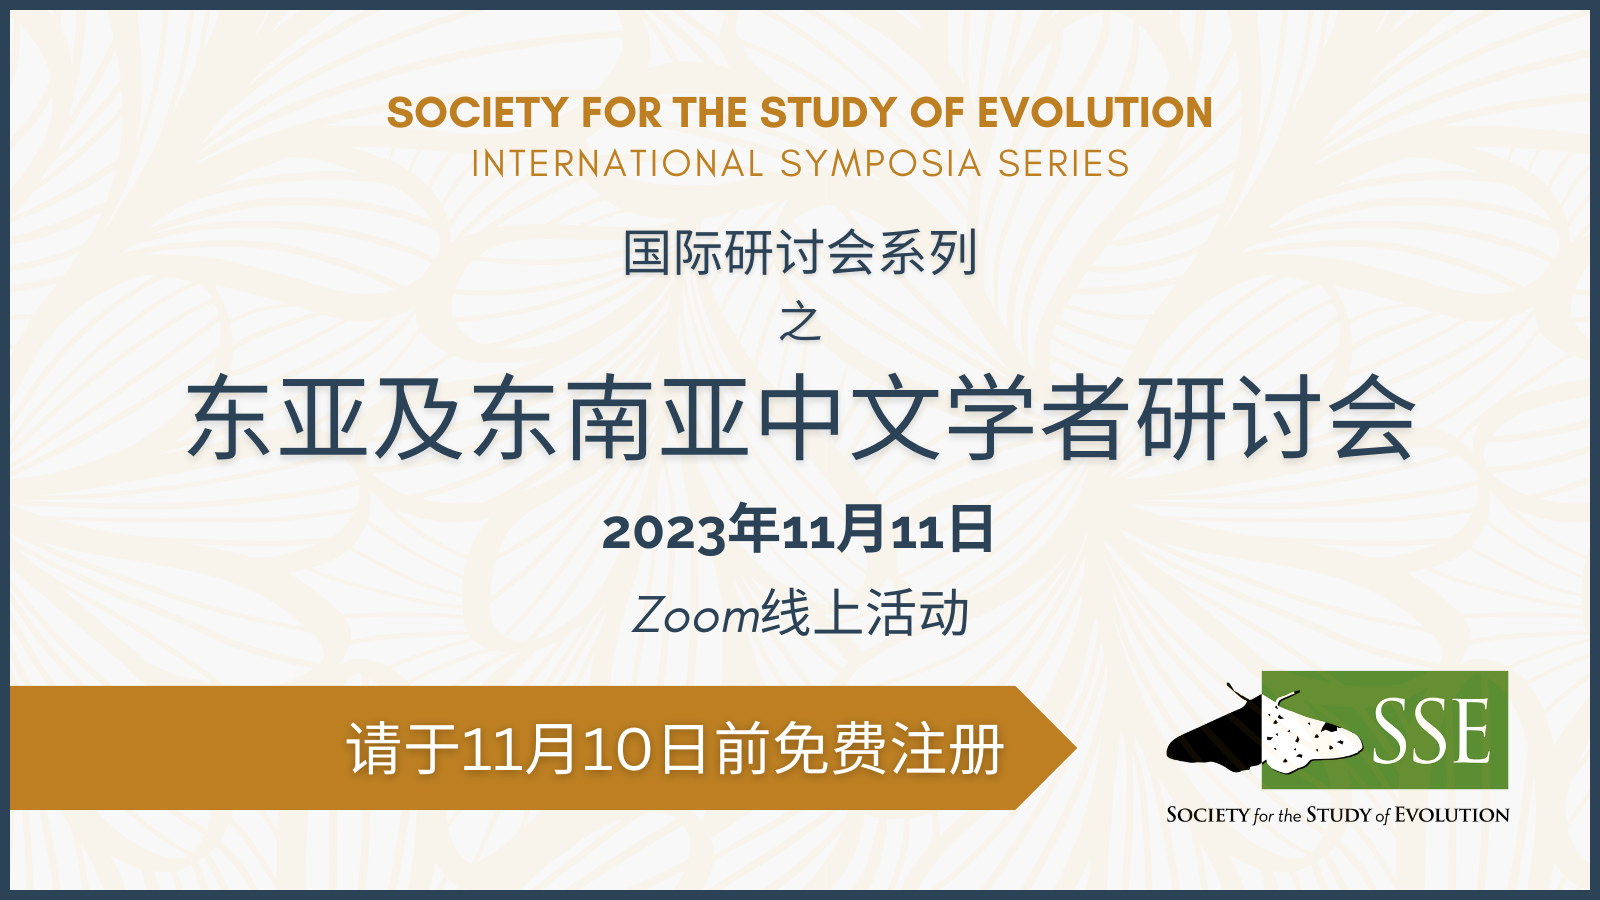 SOCIETY FOR THE STUDY OF EVOLUTION<br />
INTERNATIONAL SYMPOSIA SERIES 国际研讨会系列 之 东亚及东南亚中文学者研讨会 2023年11月11日 Zoom线上活动 请于11月10日前免费注册.